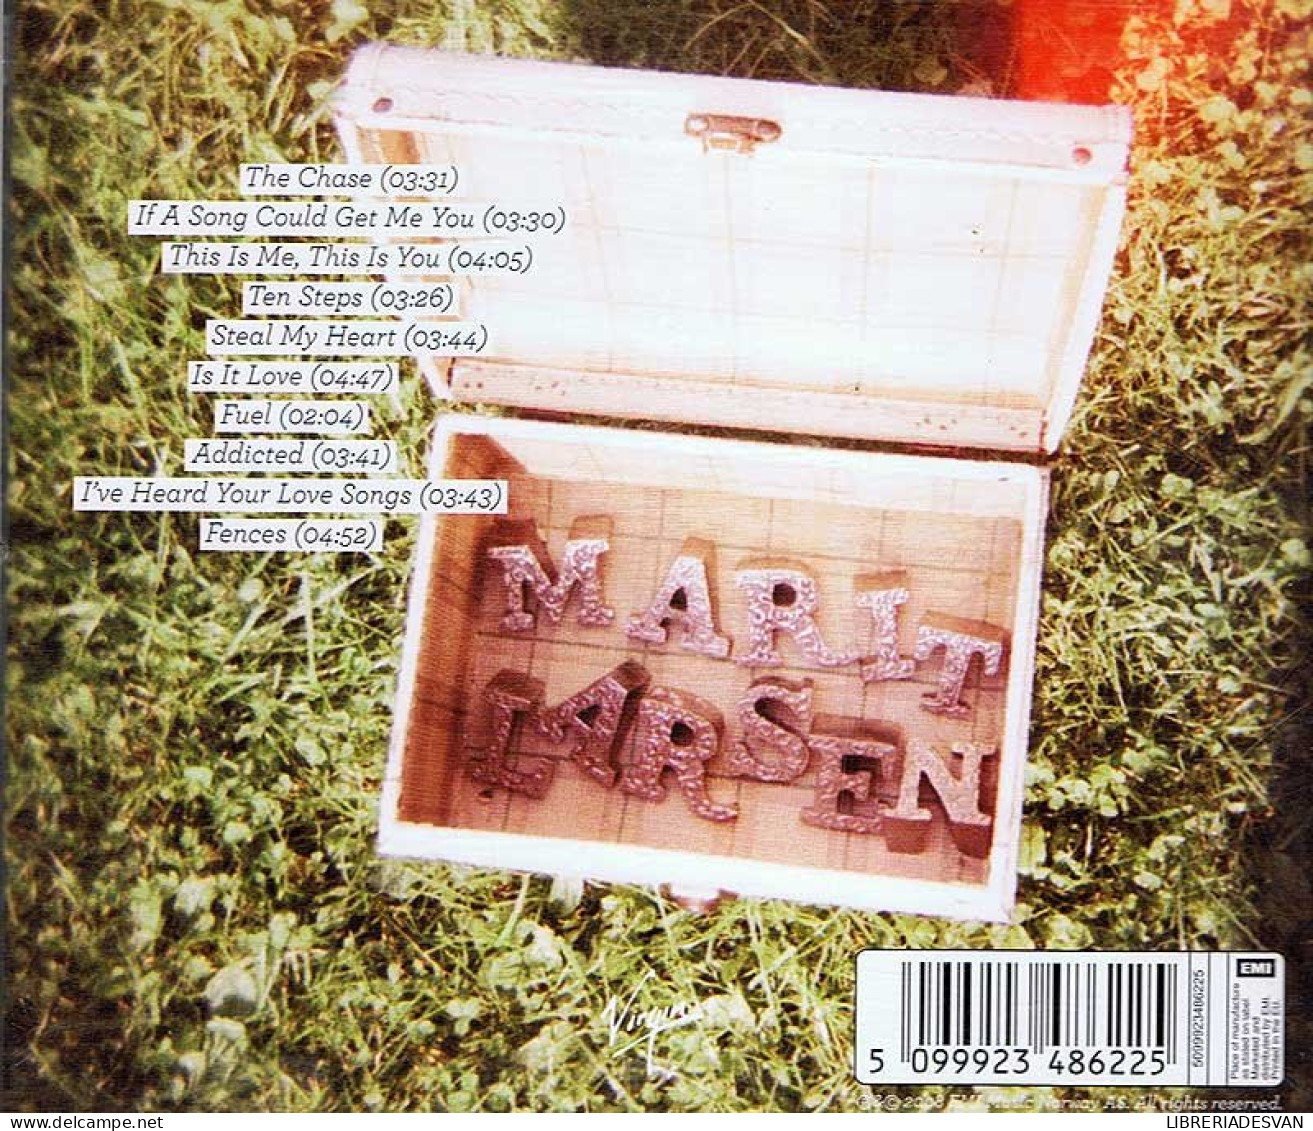 Marit Larsen - The Chase. CD - Disco, Pop